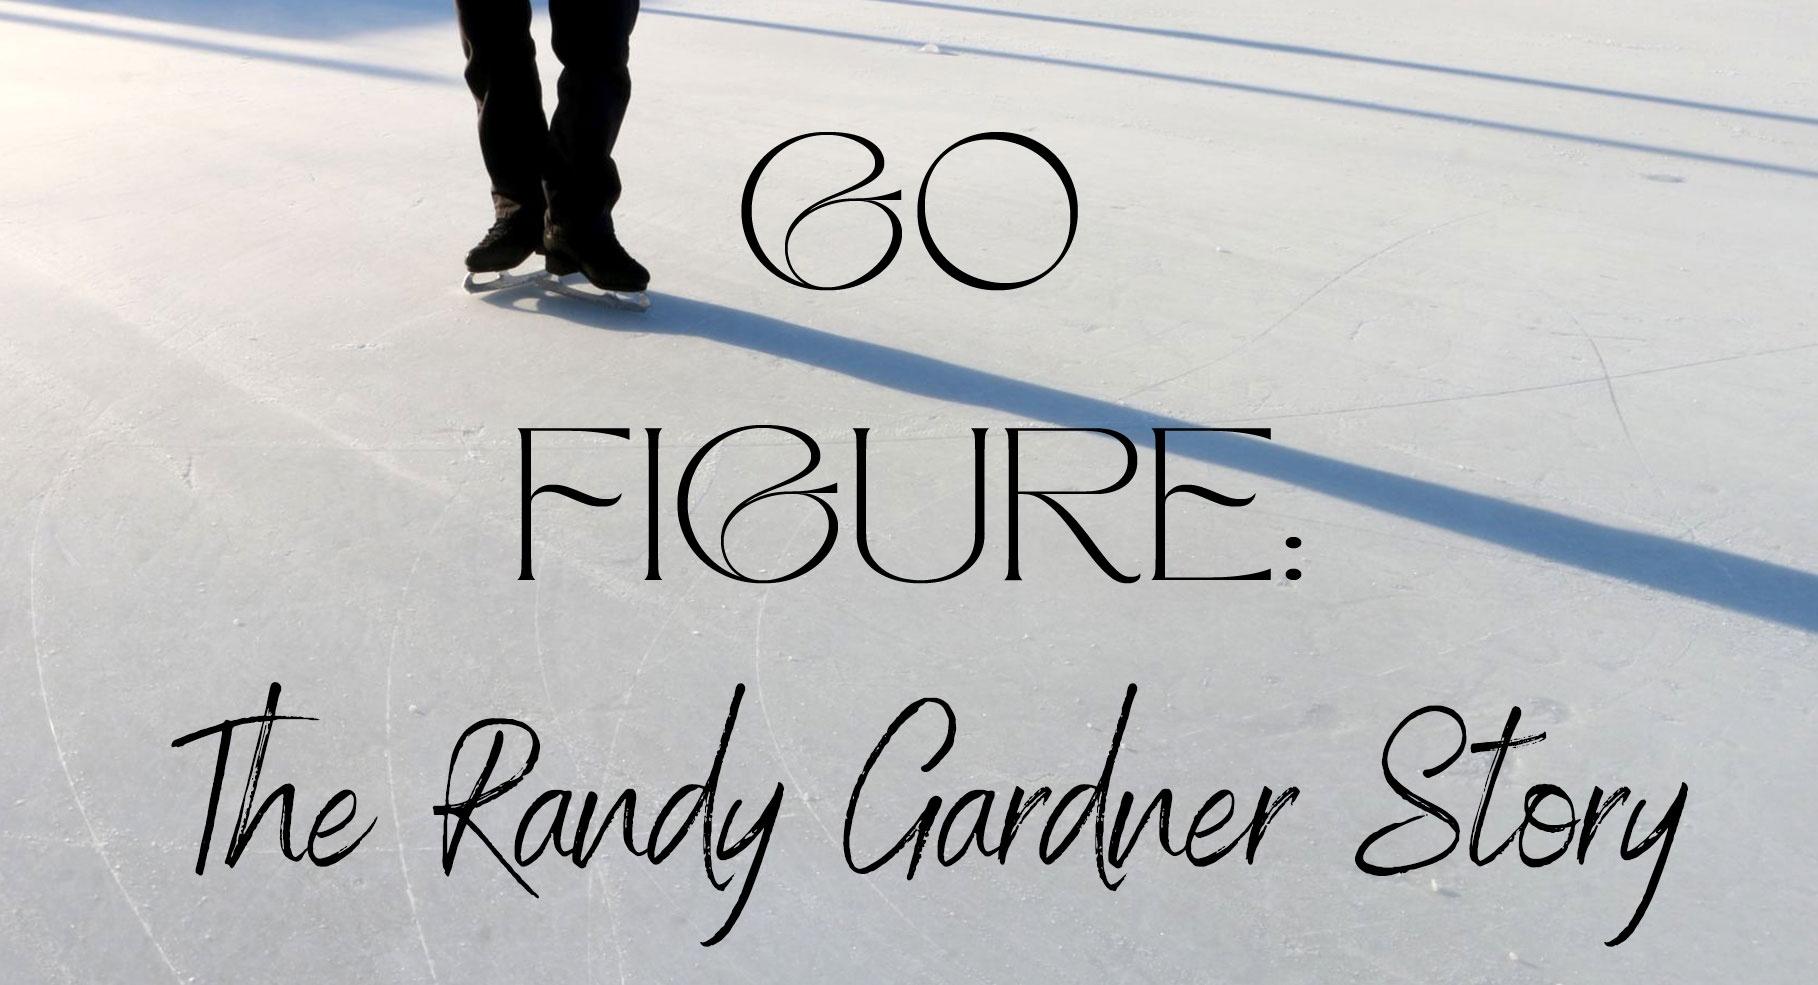 Go Figure The Randy Gardner Story Go Figure The Randy Gardener Story Vermont Public photo